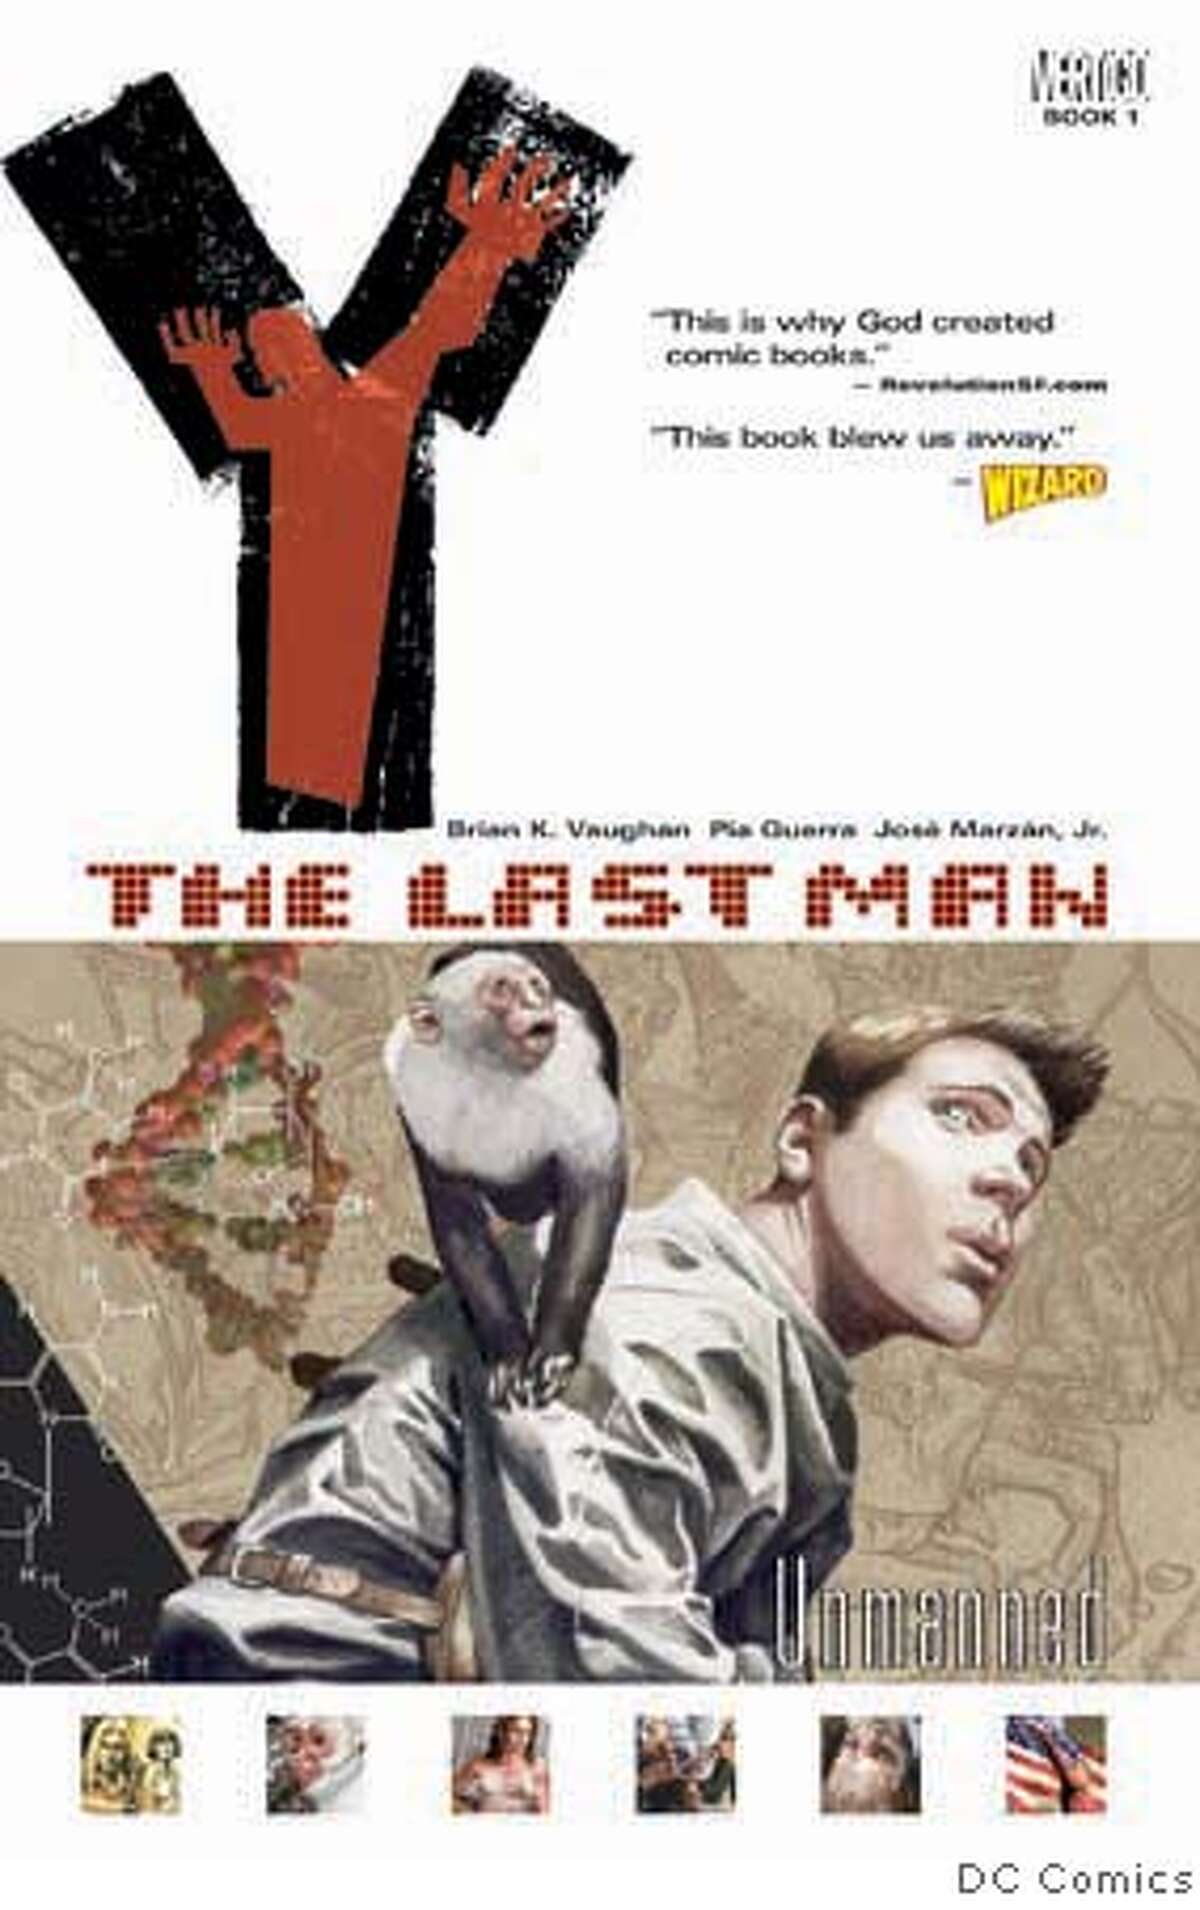 "The Last Man - Unmanned" by Vertigo Comics Credit: DC Comics